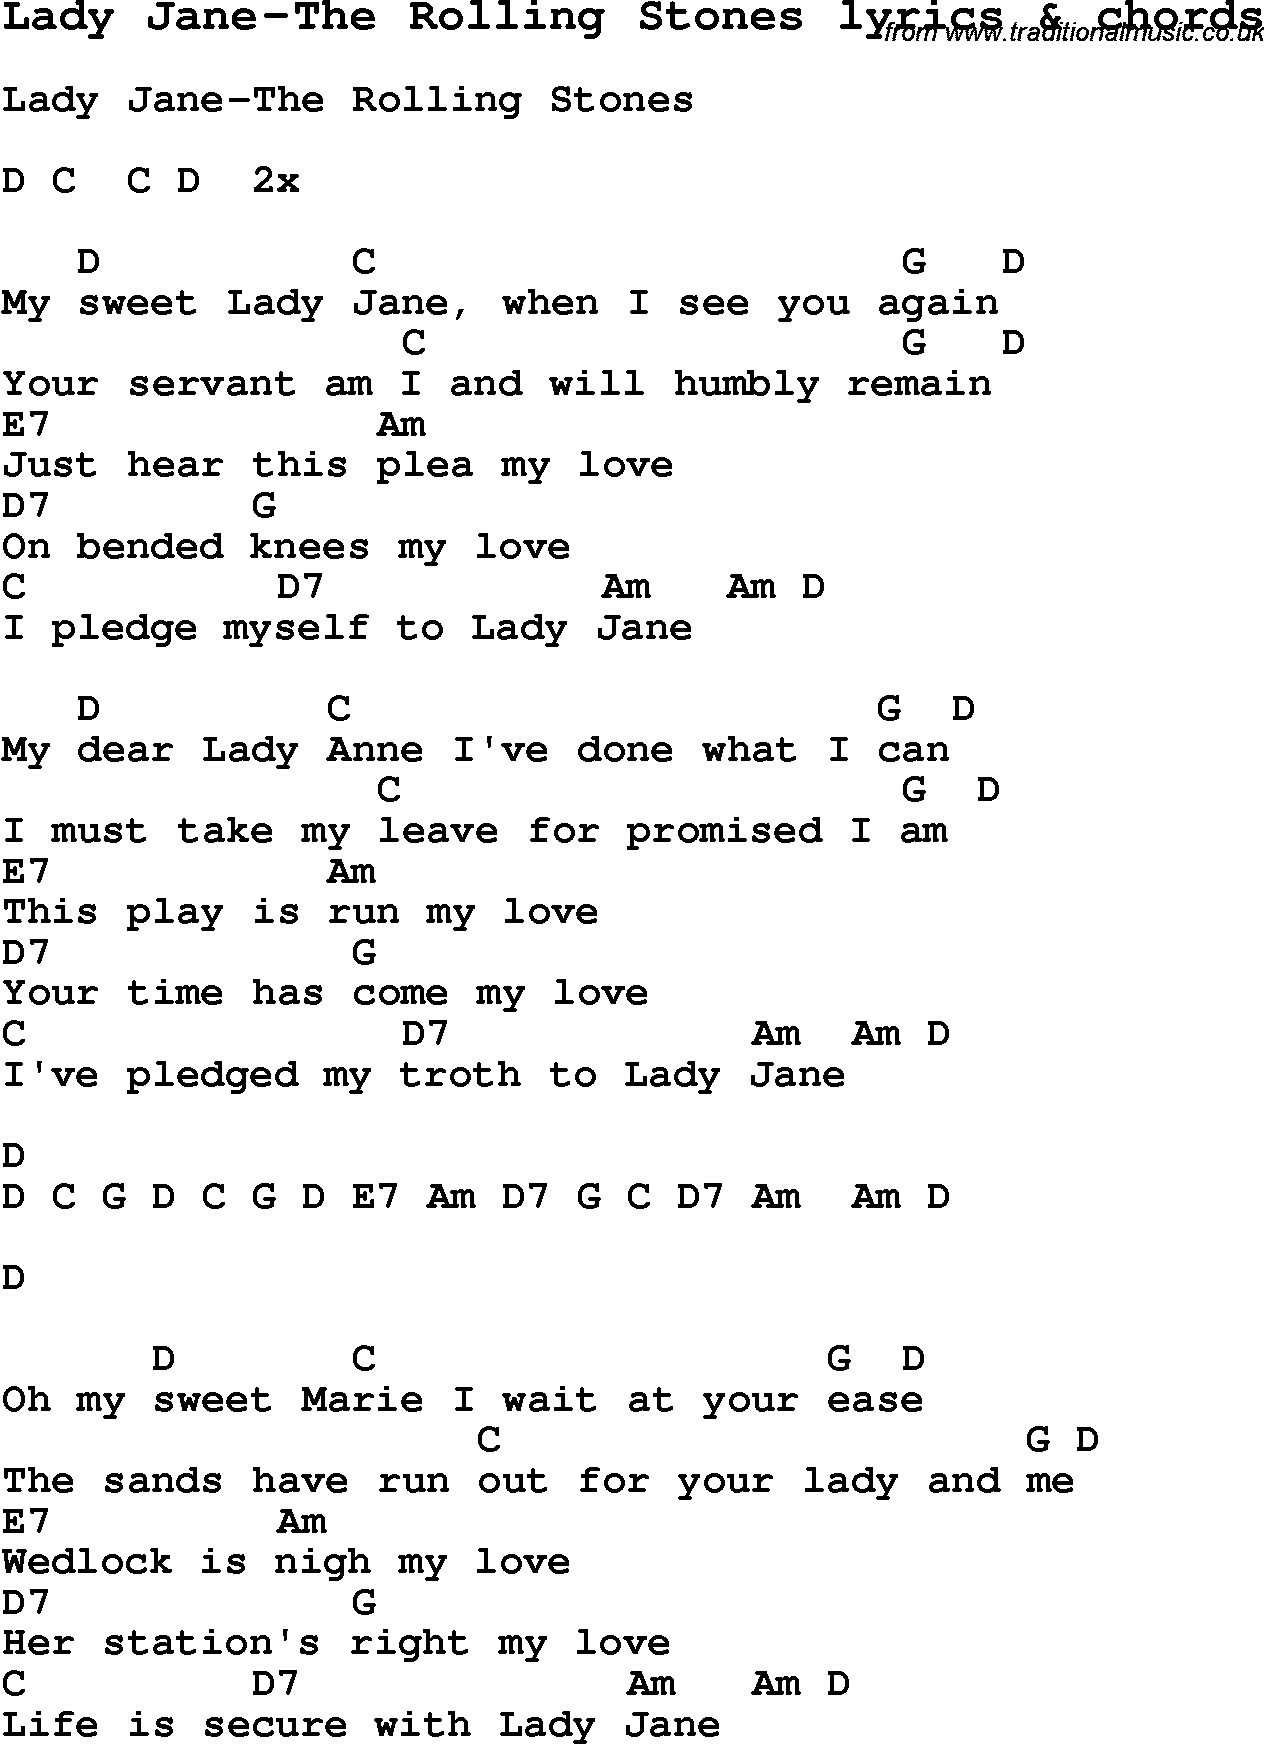 Love Song Lyrics for: Lady Jane-The Rolling Stones with chords for Ukulele, Guitar Banjo etc.